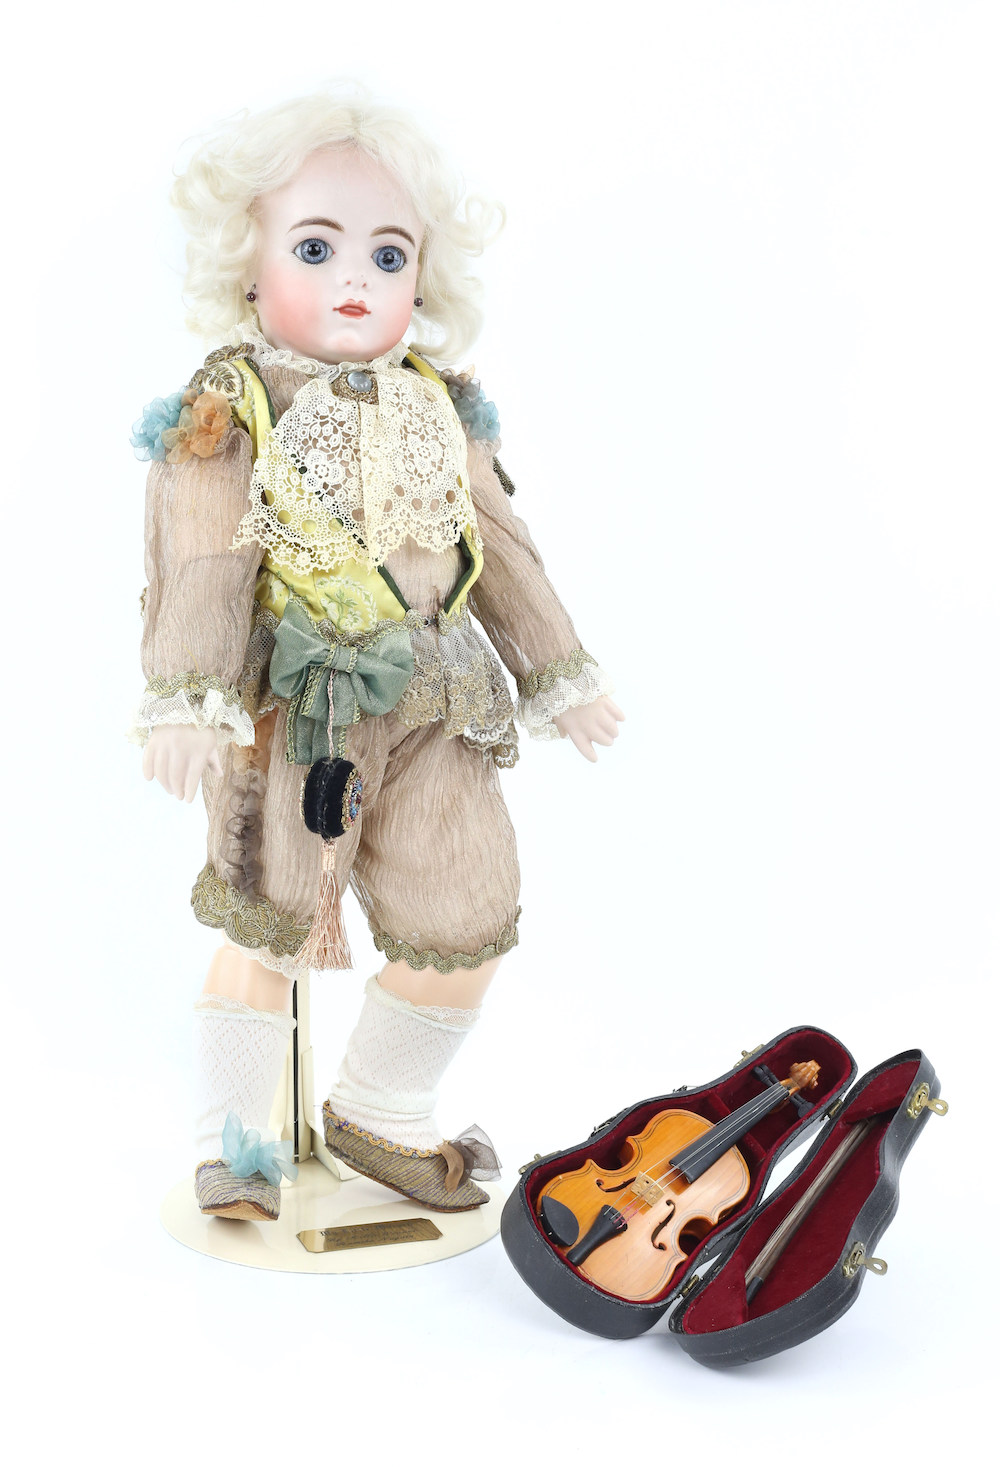 A Rumiko Nagata My Little Mozart BRU type doll 